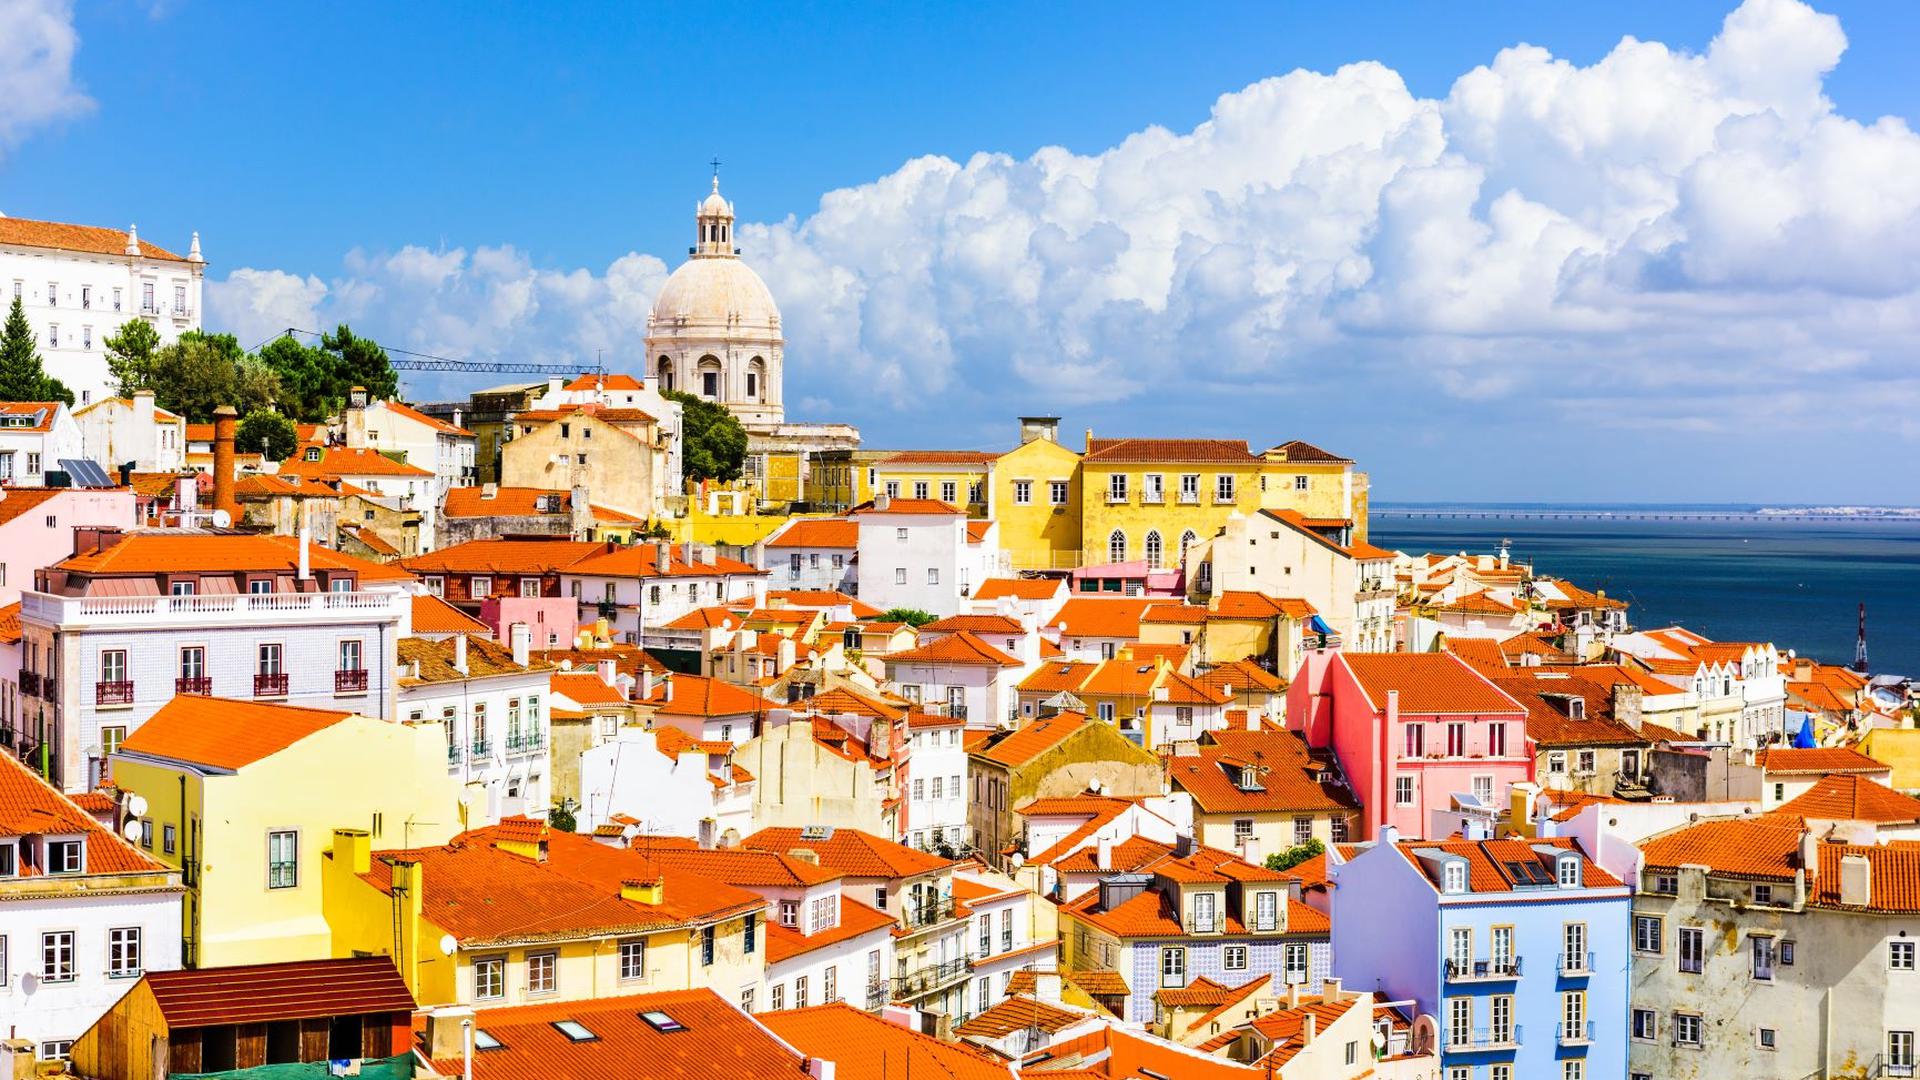 Lisbon, set between seven hills on the atlantic coast combines city and beach life